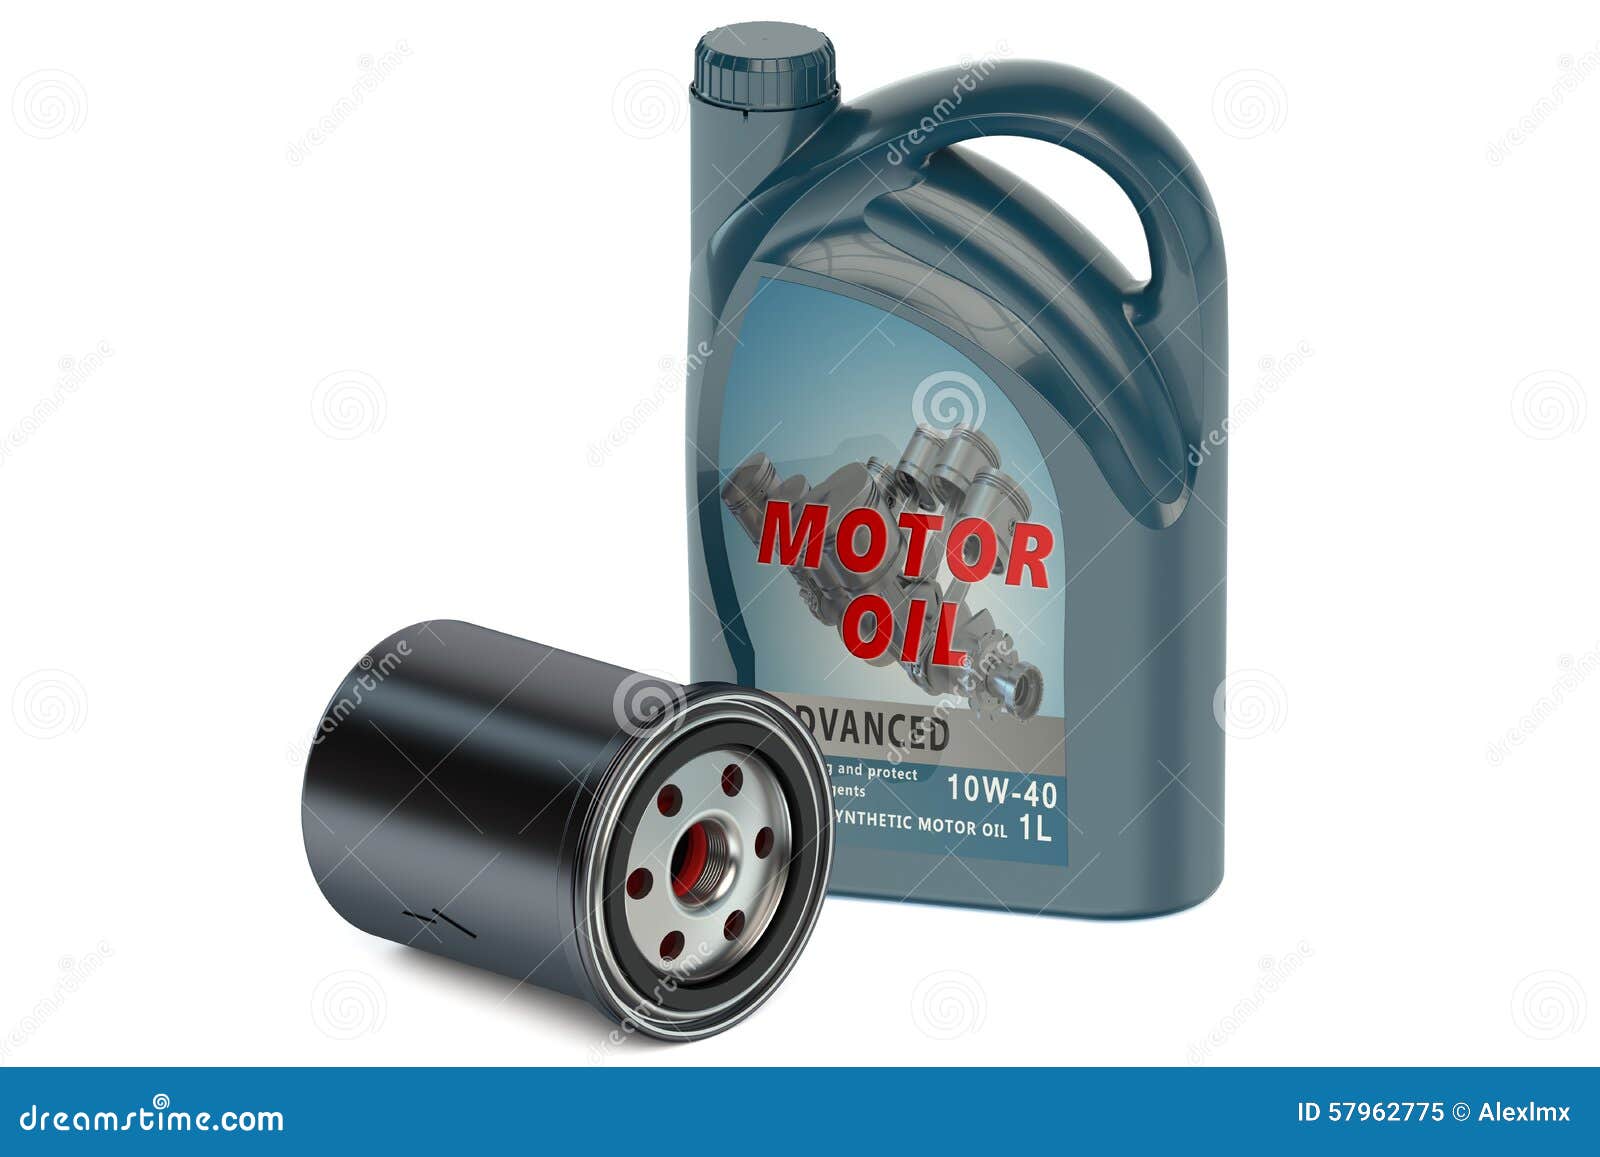 Motor oil and oil filter stock illustration. Illustration of automobile ...